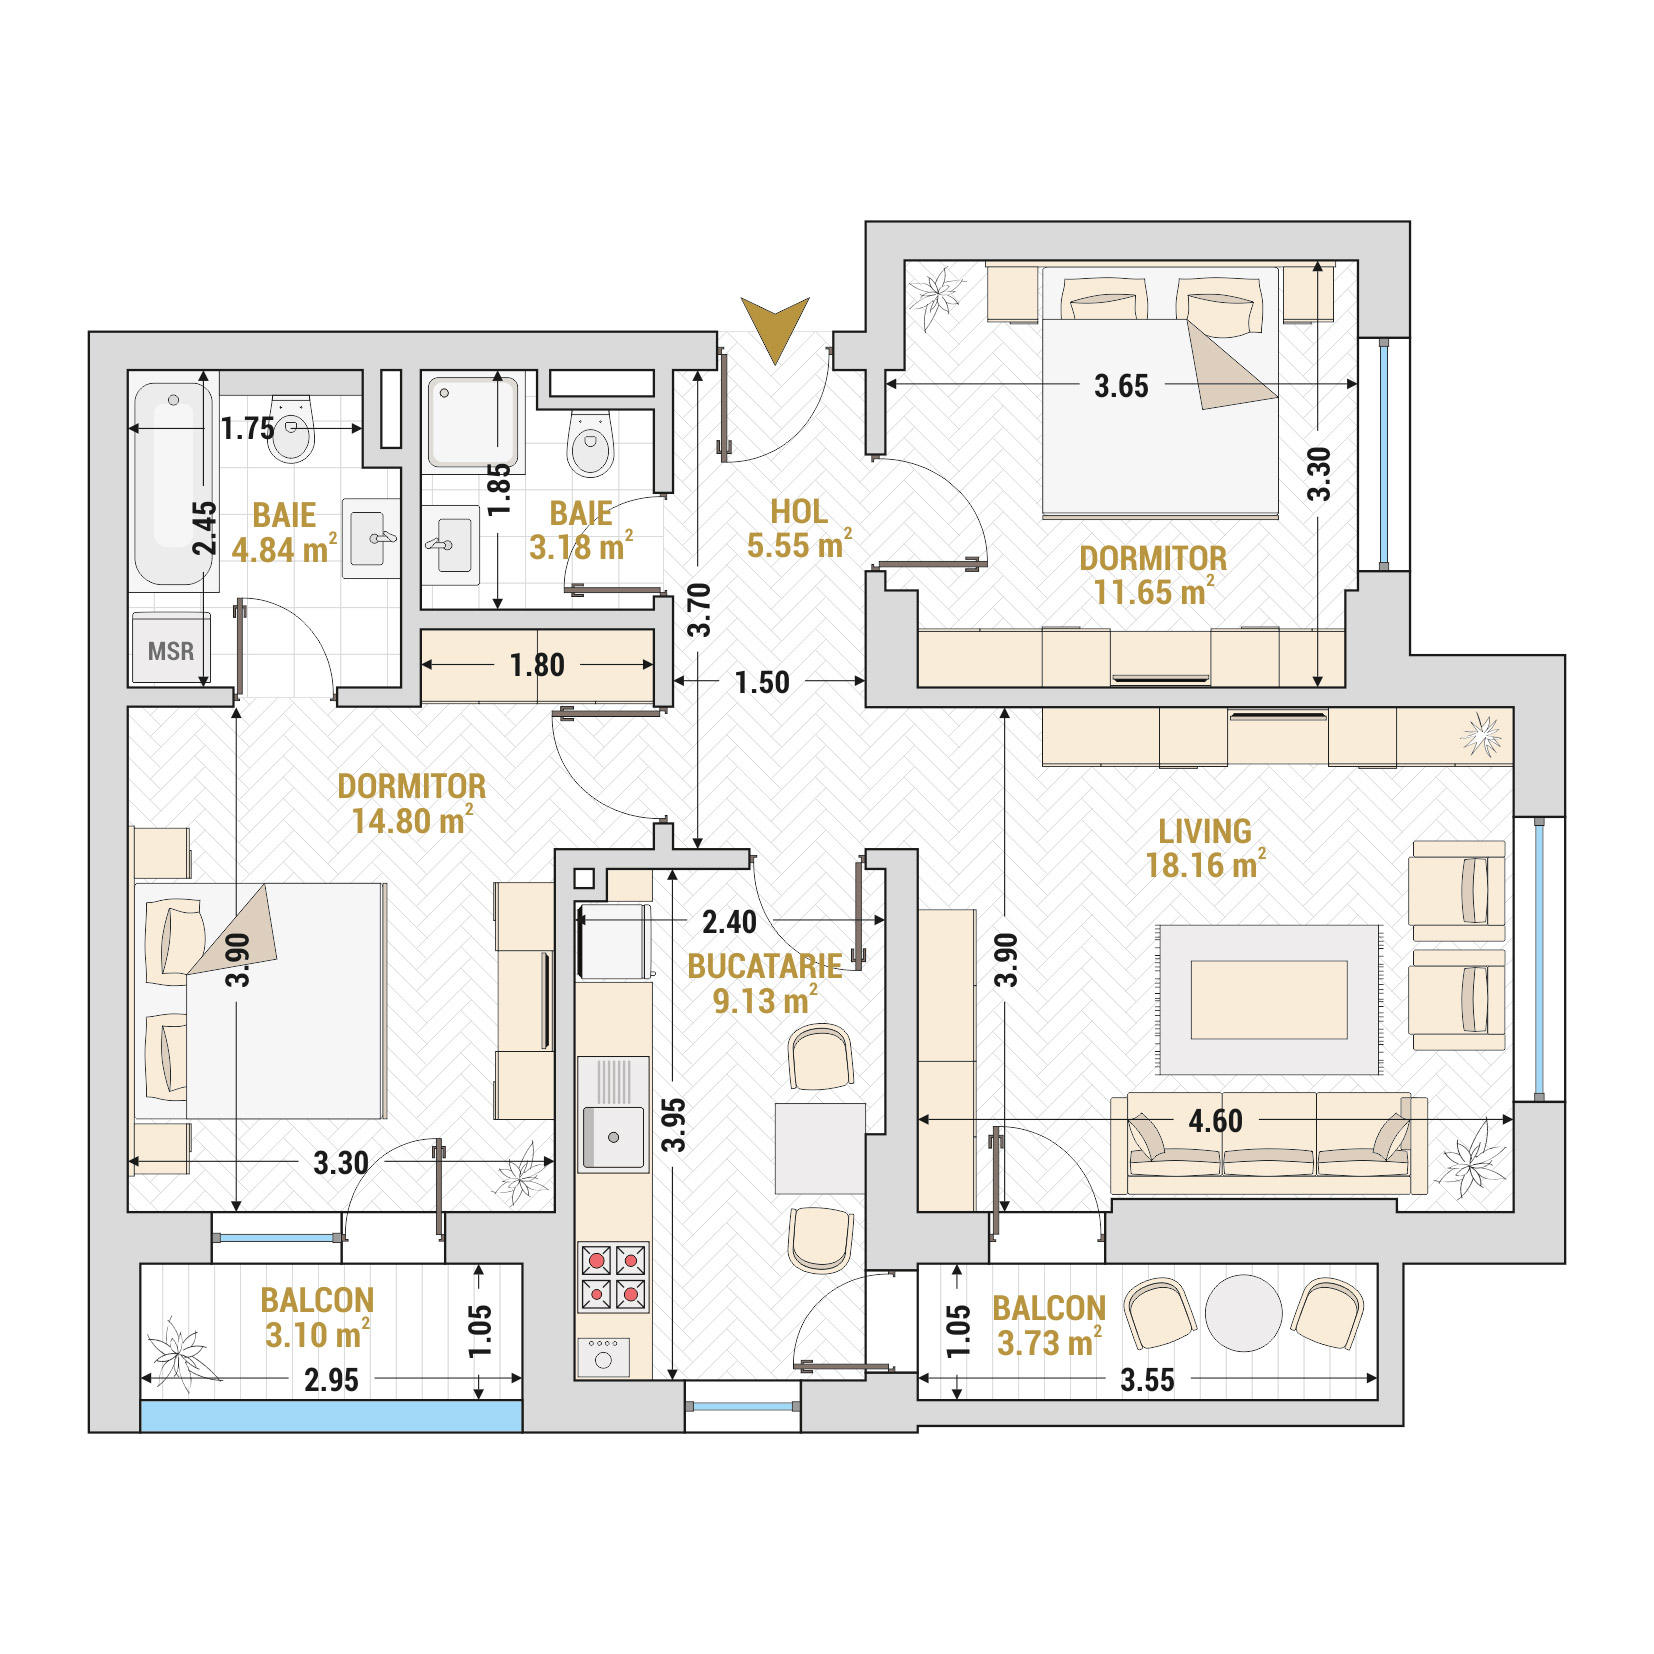 Apartament 3 Camere Tip 1 Corp 3 - Drumul Taberei Residence - Apartamente de vanzare Bucuresti - Suprafata utila totala - 74.14 mp